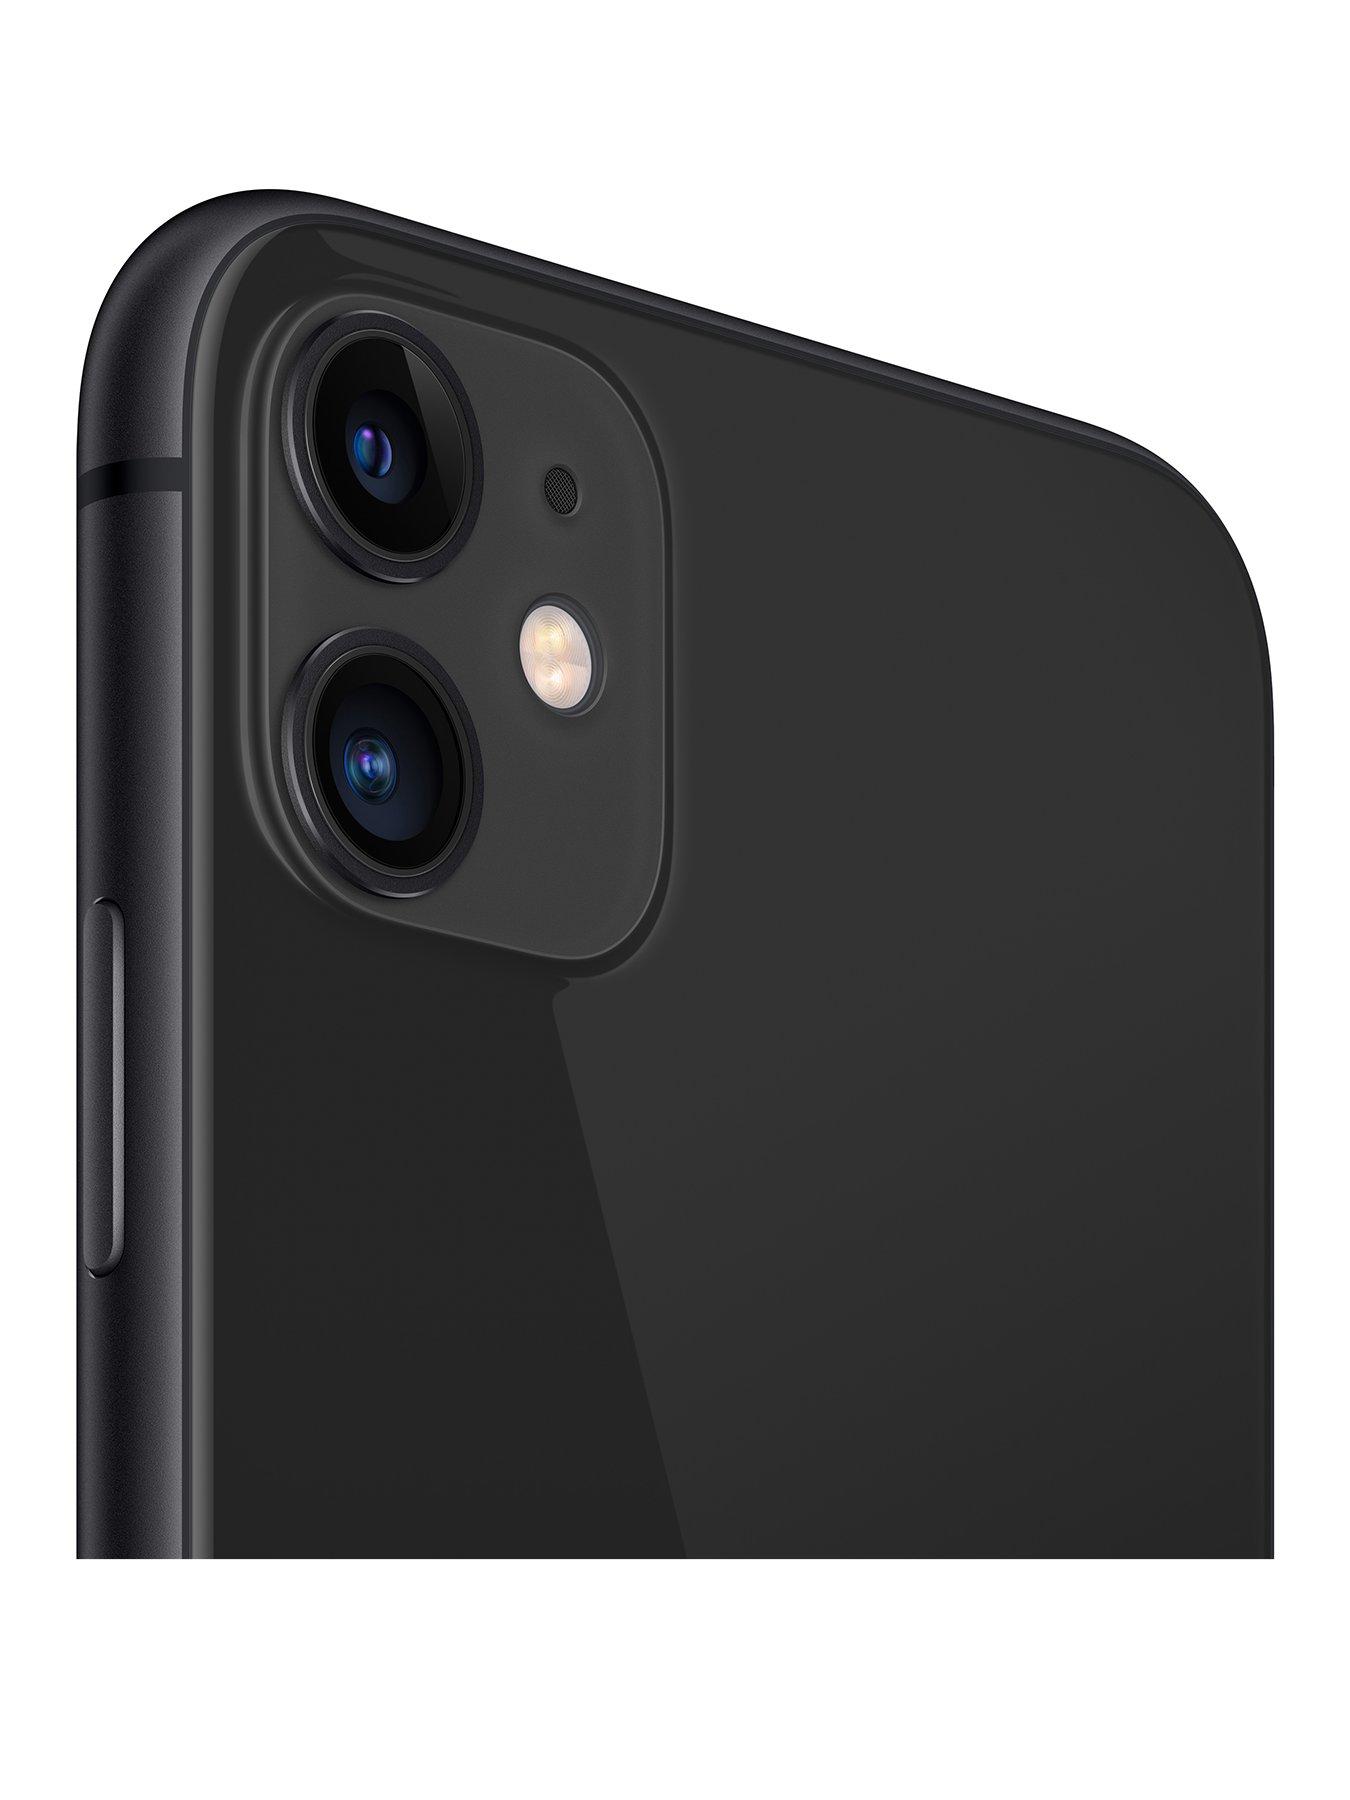 Apple iPhone 11, 64Gb - Black | very.co.uk